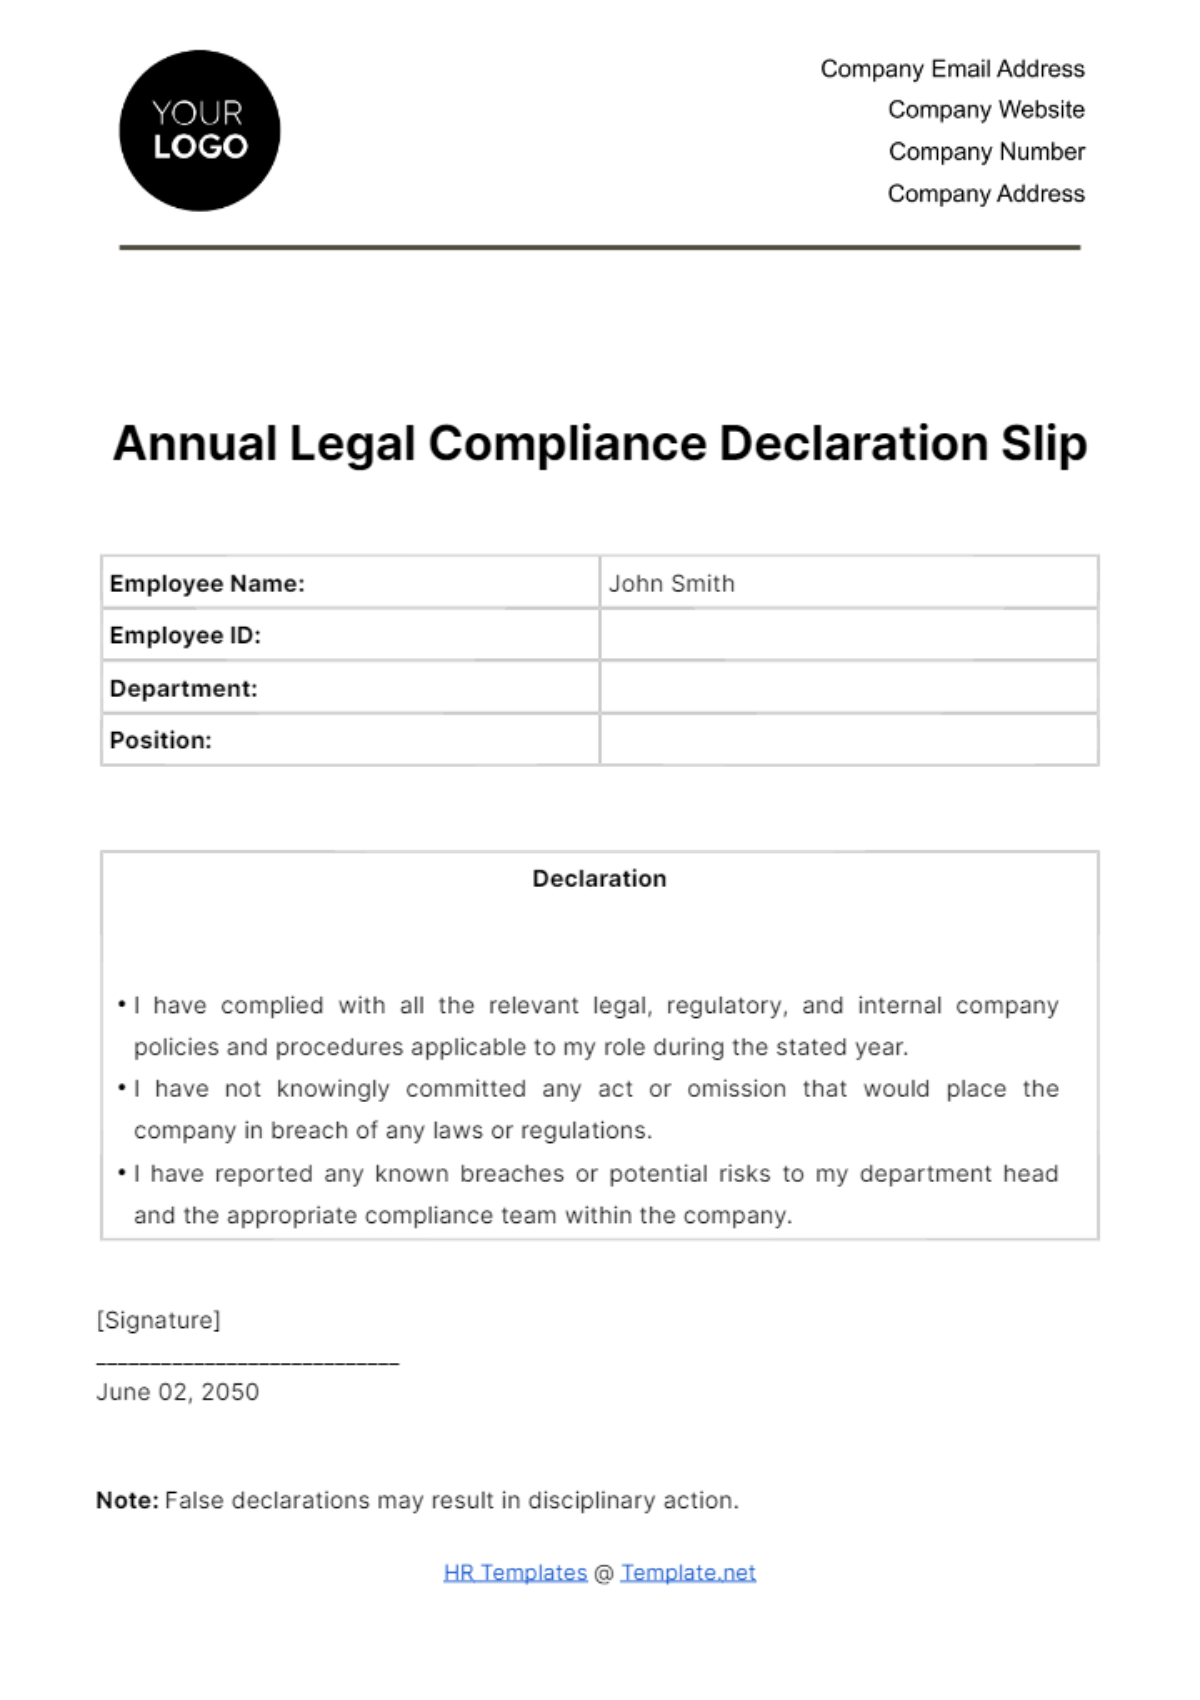 Free Annual Legal Compliance Declaration Slip HR Template